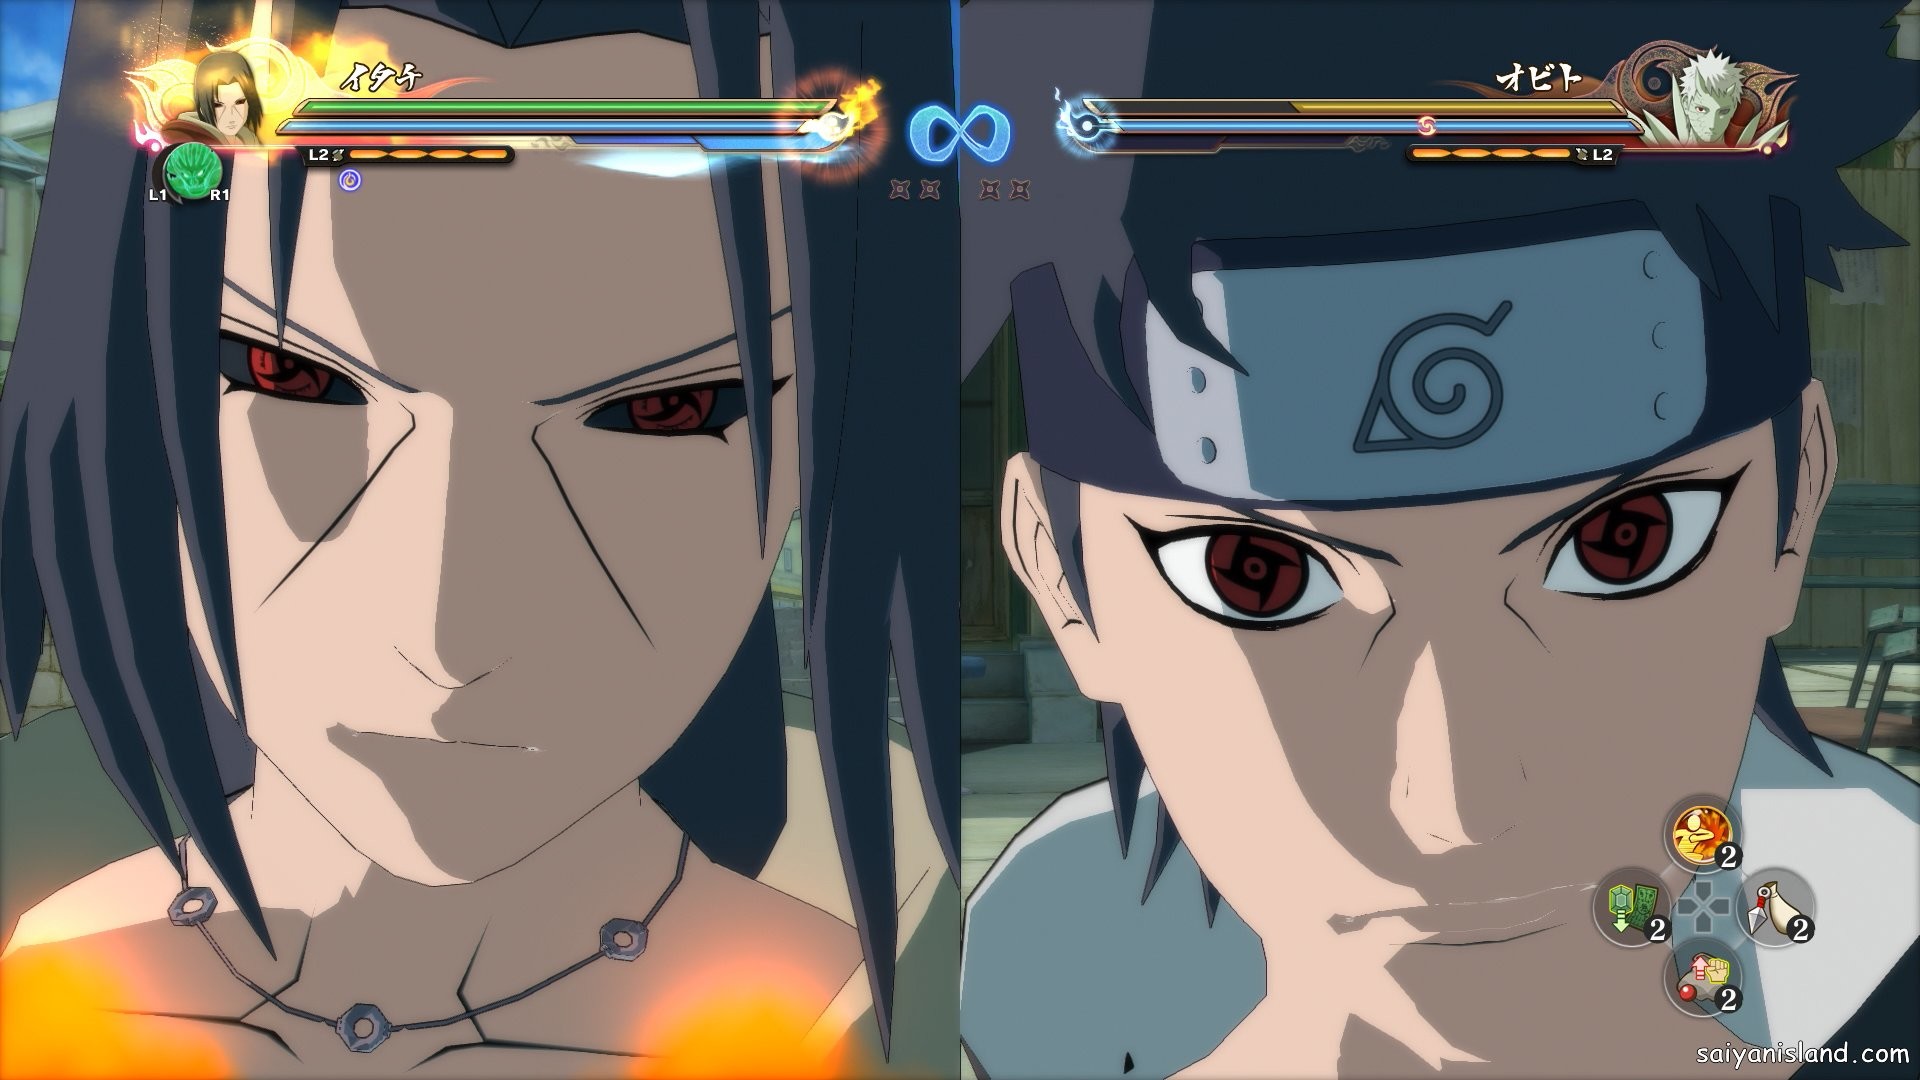 Naruto Storm 4: Perfect Susanoo Shisui and Itachi Screenshots/Art